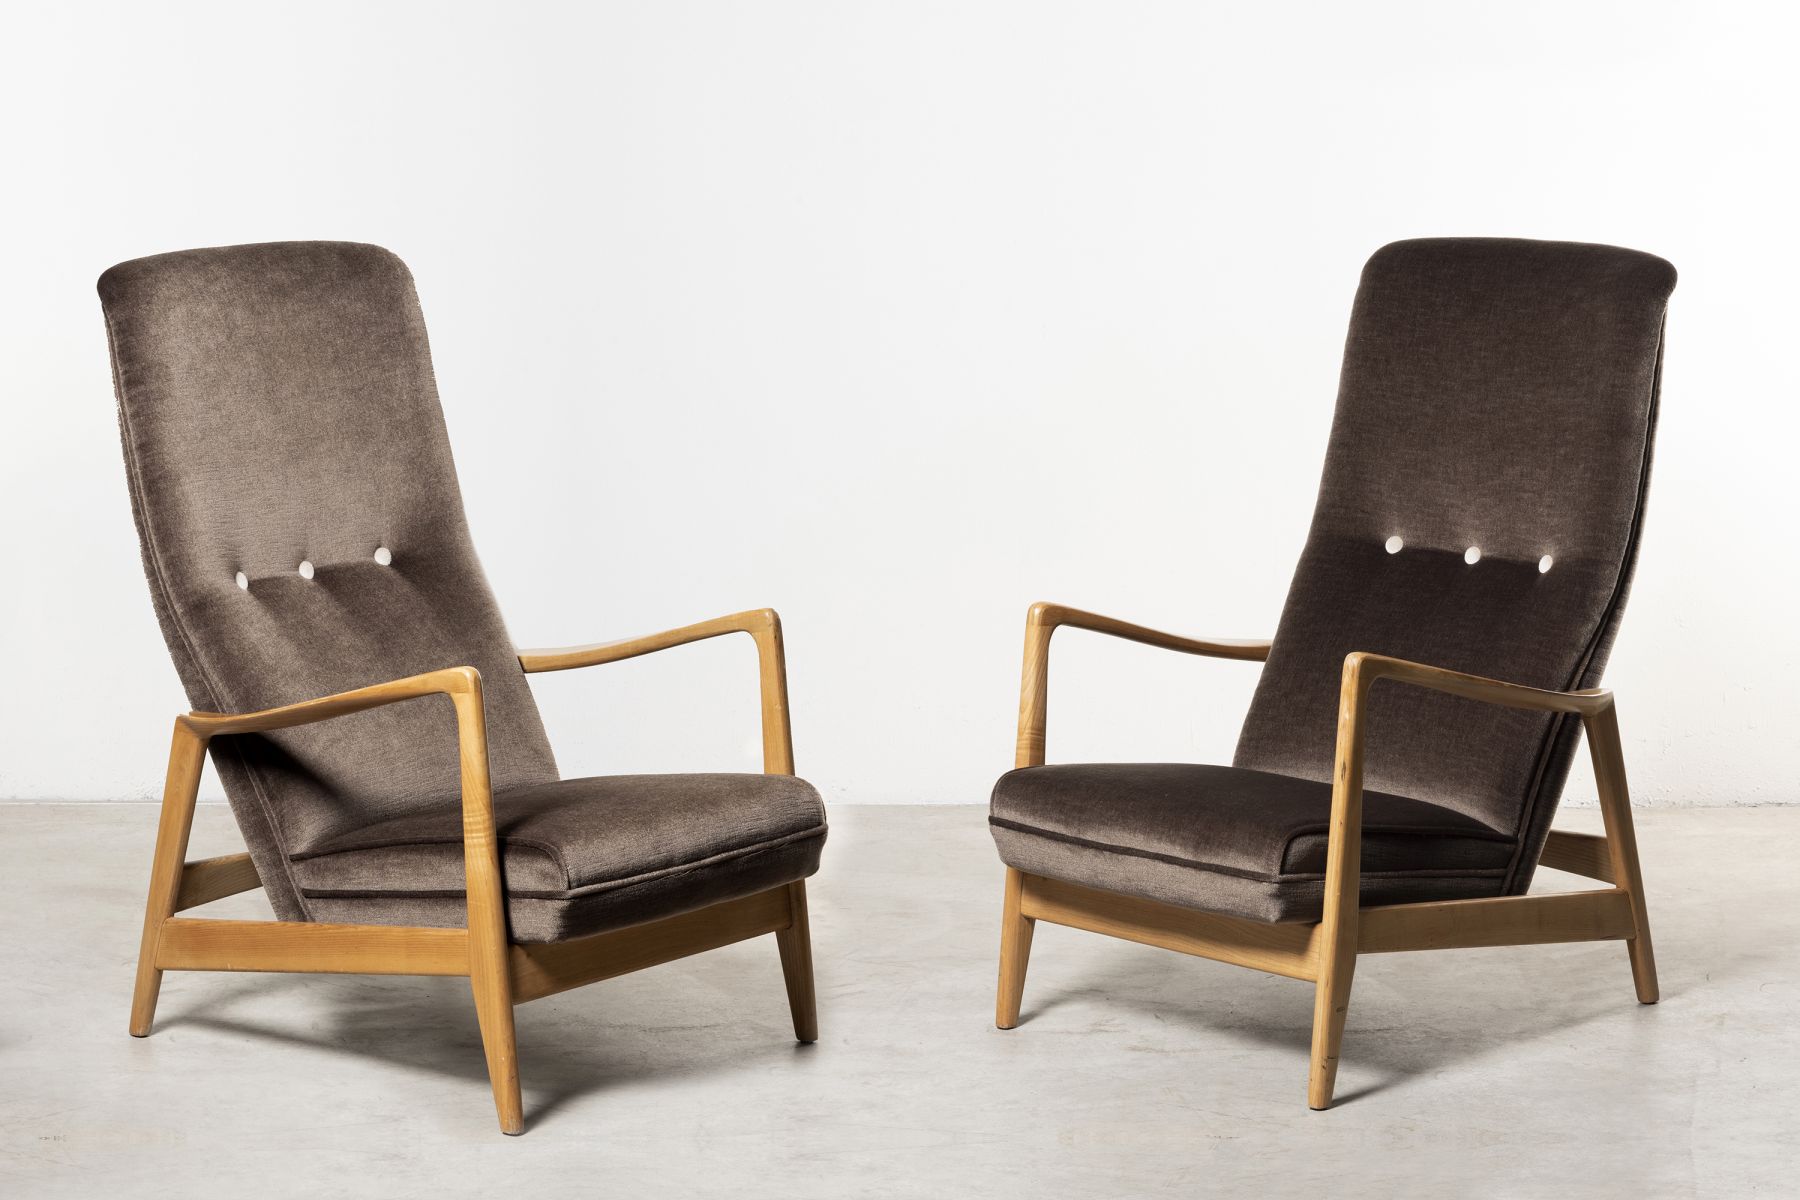 Three easy chairs Gio Ponti pic-1